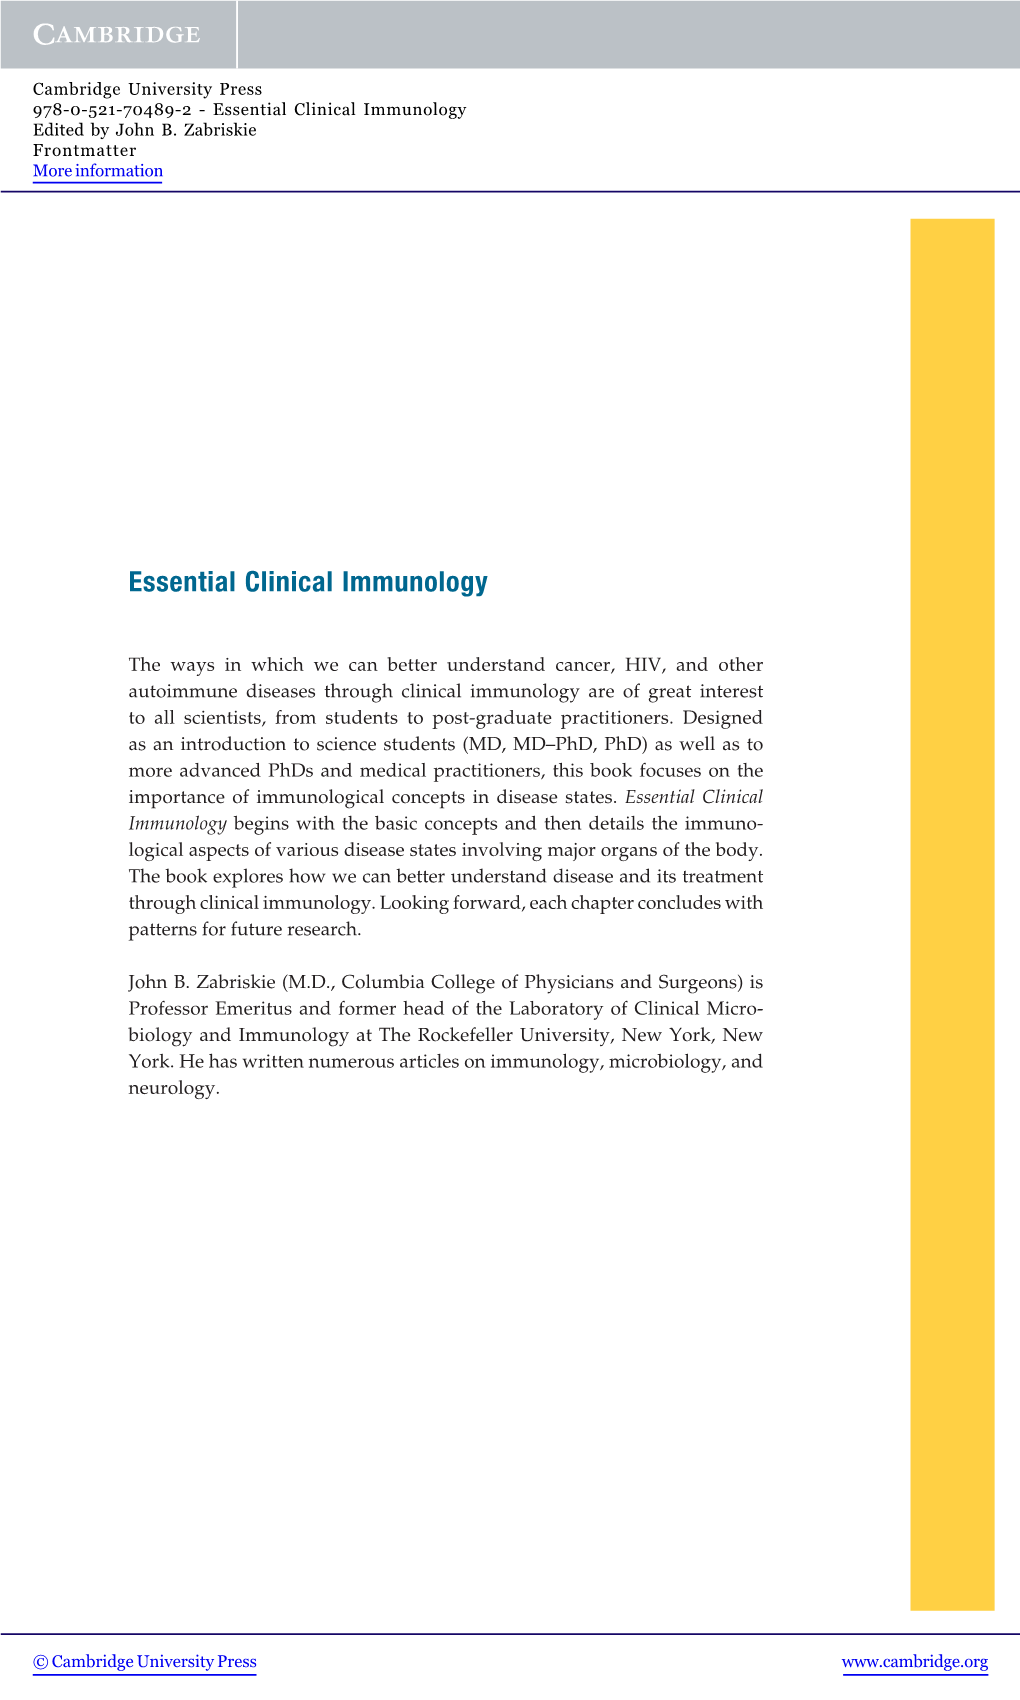 Essential Clinical Immunology Edited by John B